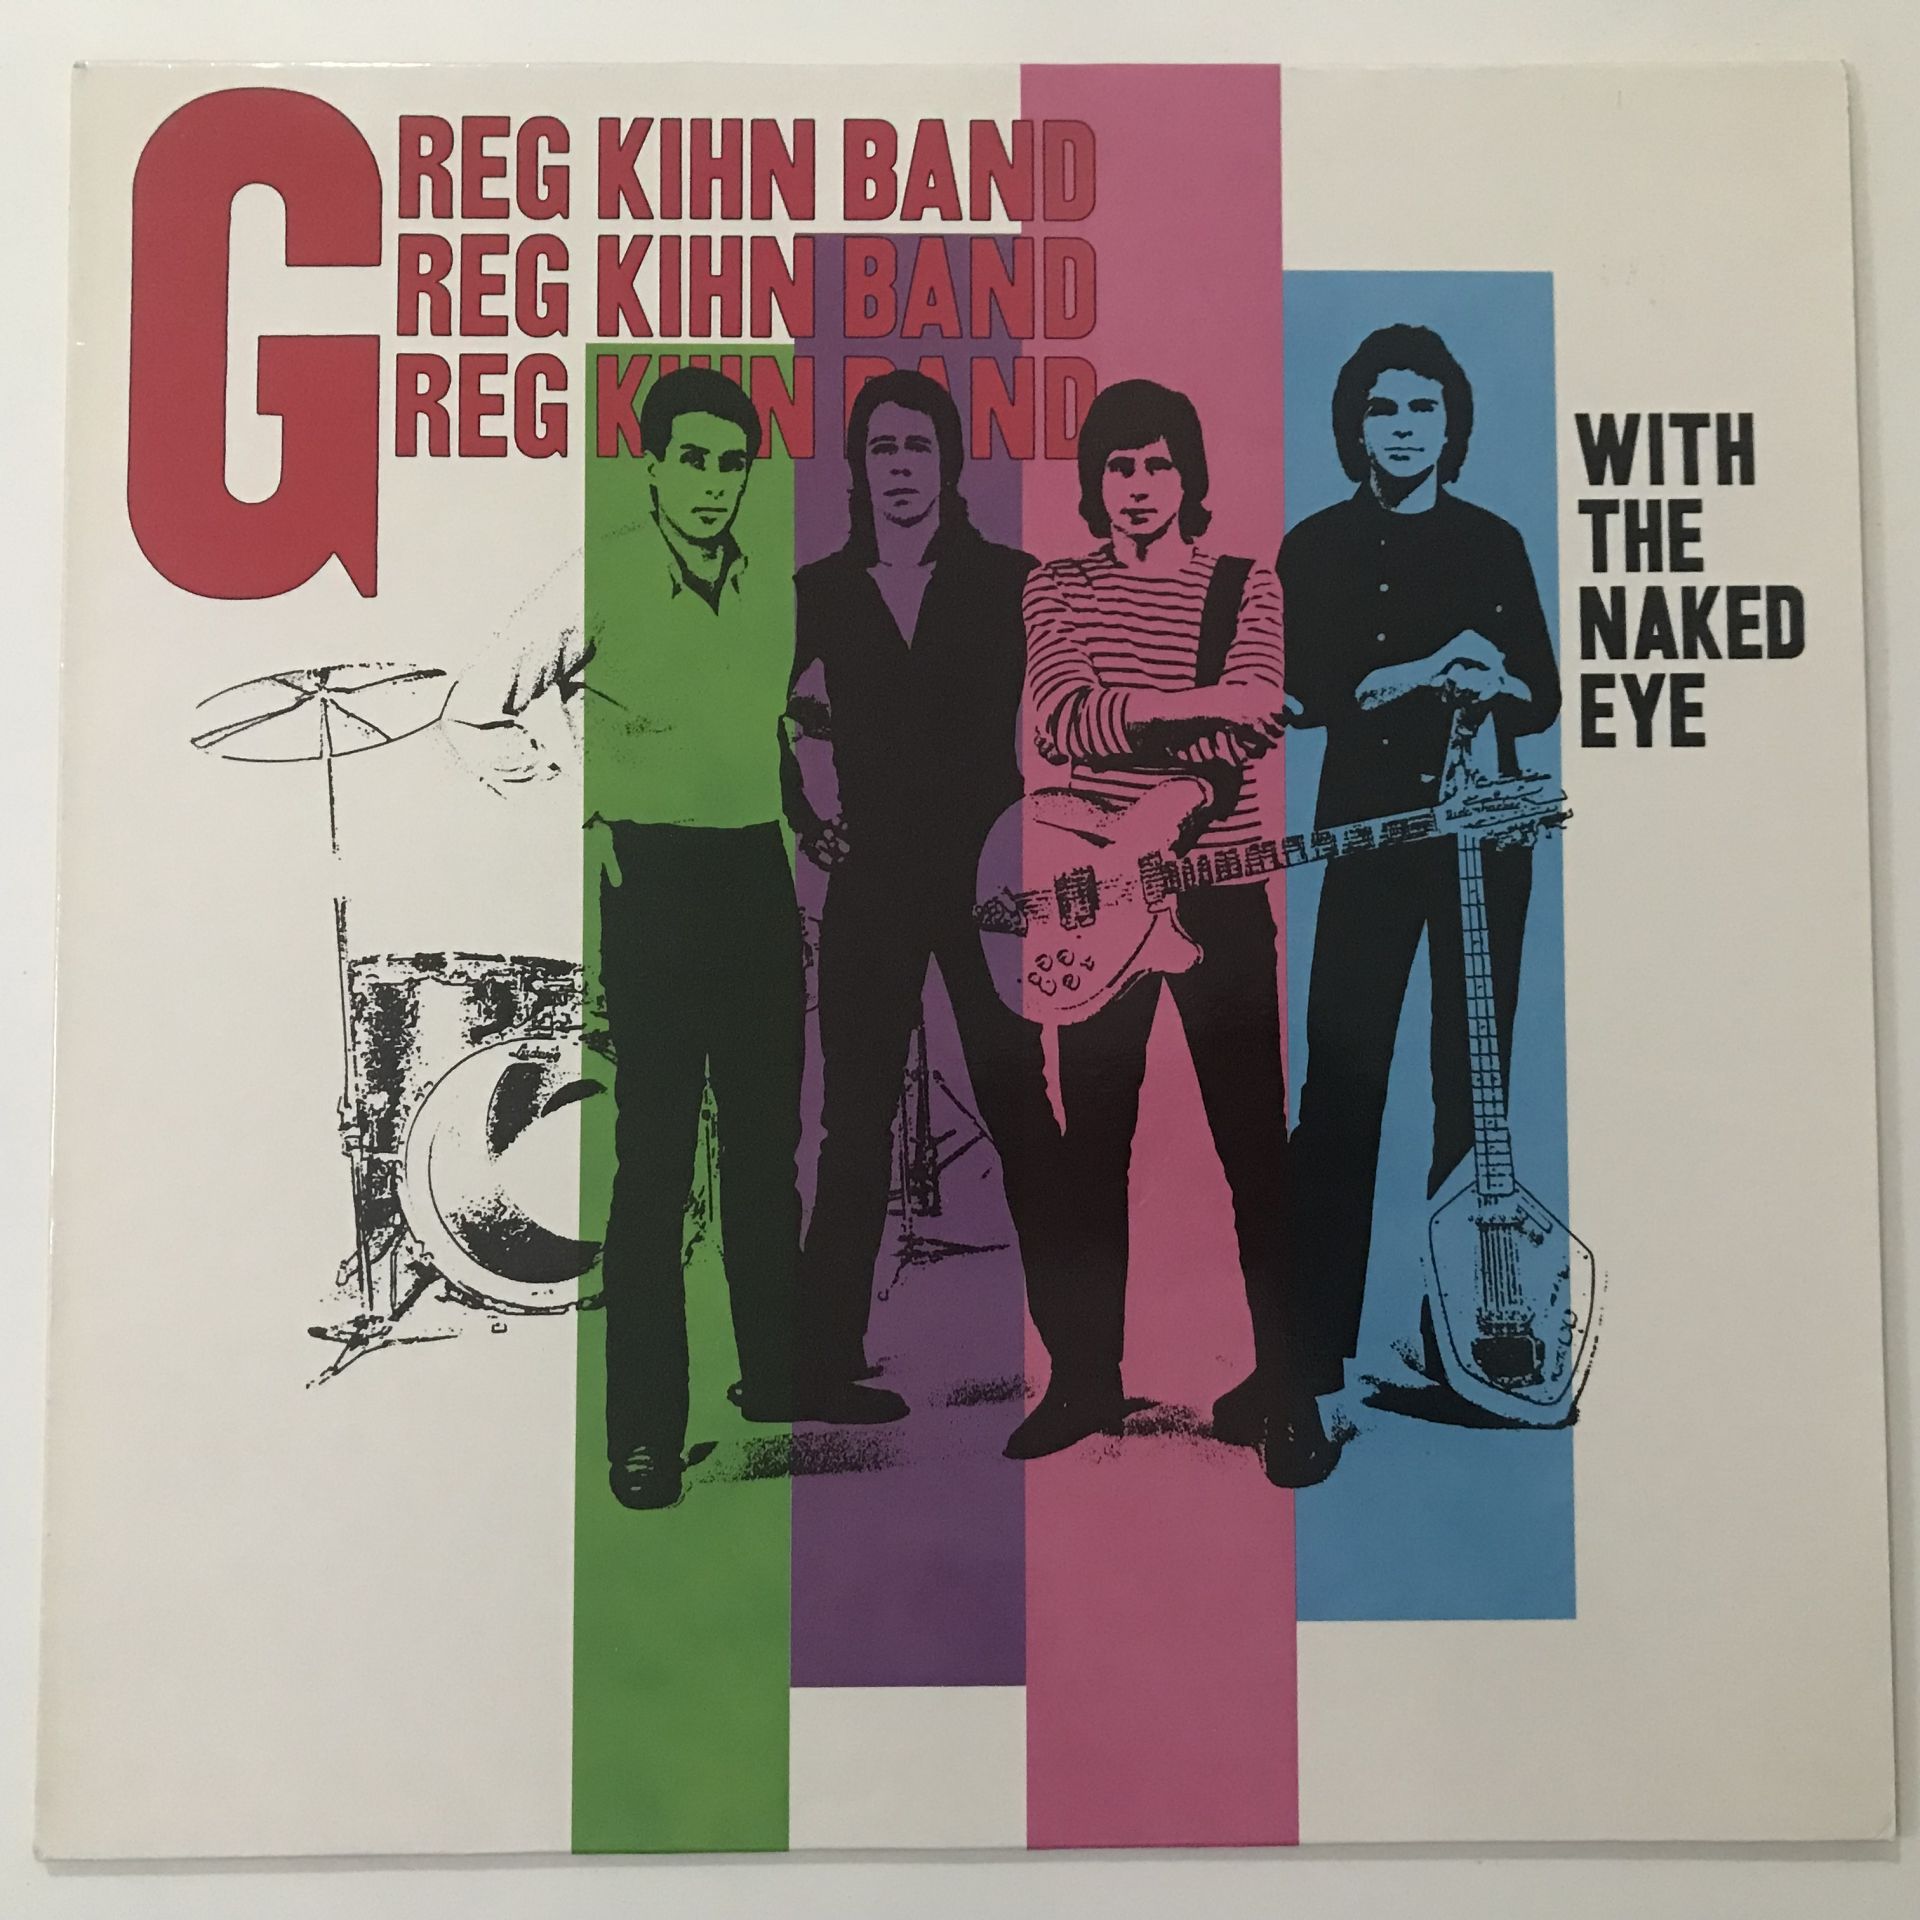 Greg Kihn Band – With The Naked Eye